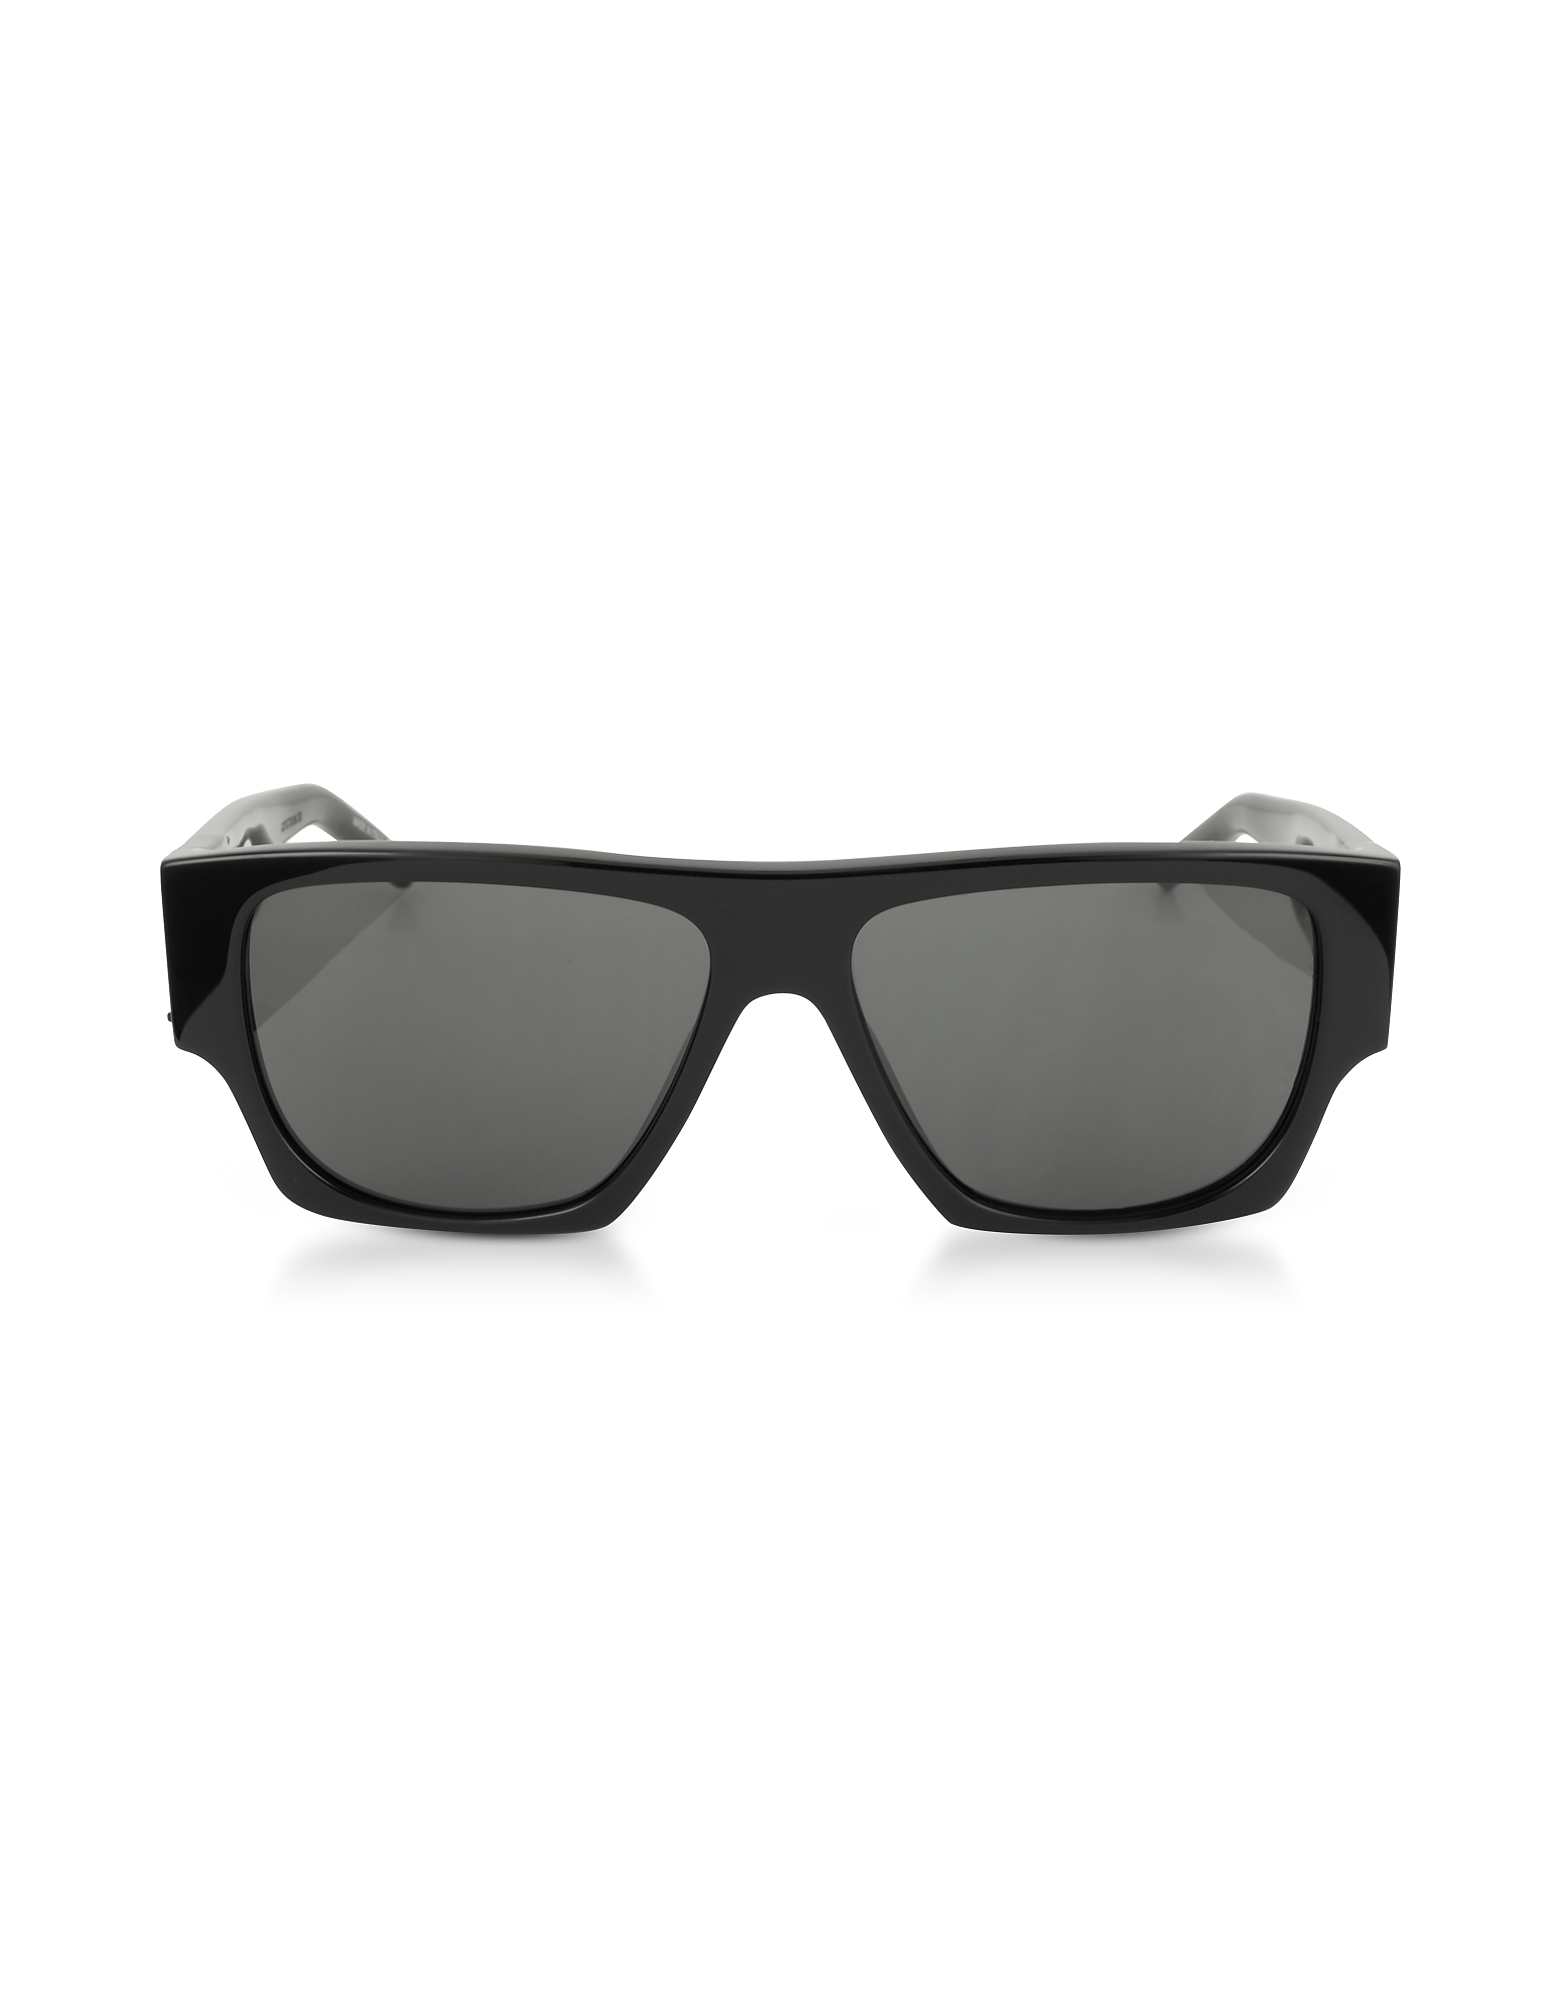 

SL M17 Rectangle Frame Acetate Men's Sunglasses, Black/gray